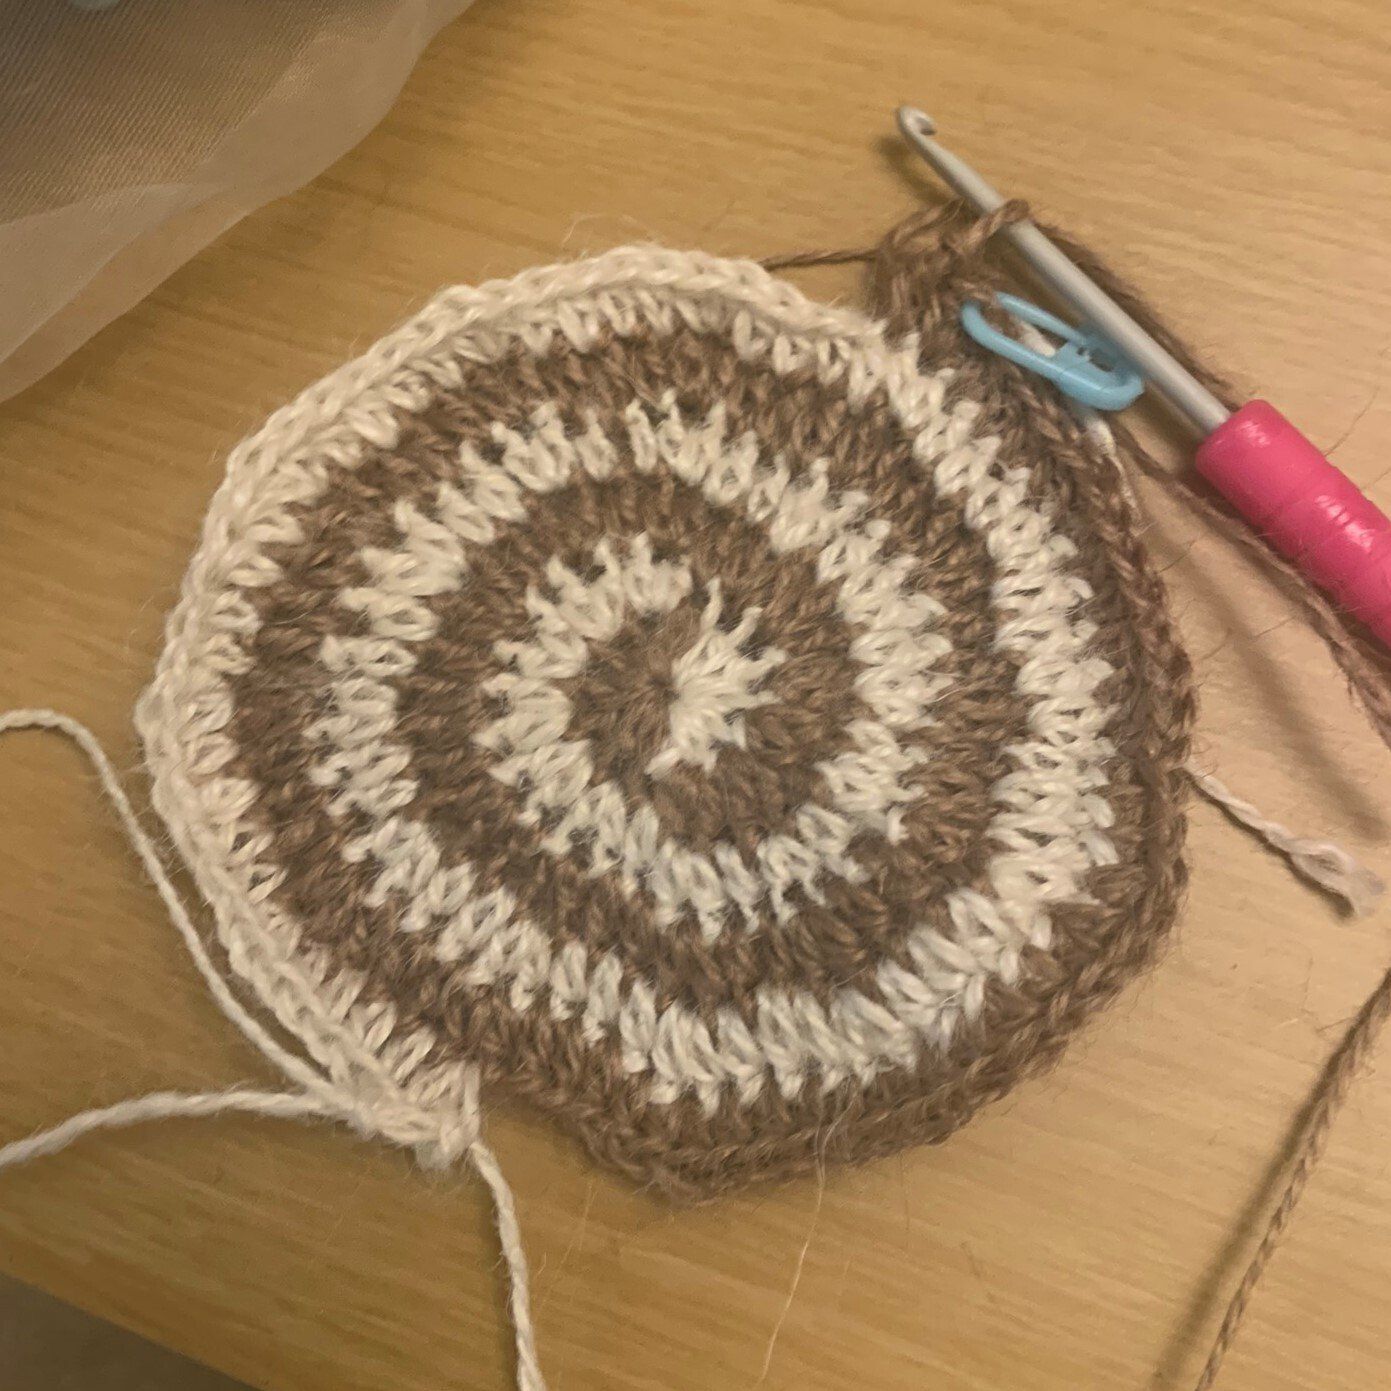 How to crochet a spiral summer hat